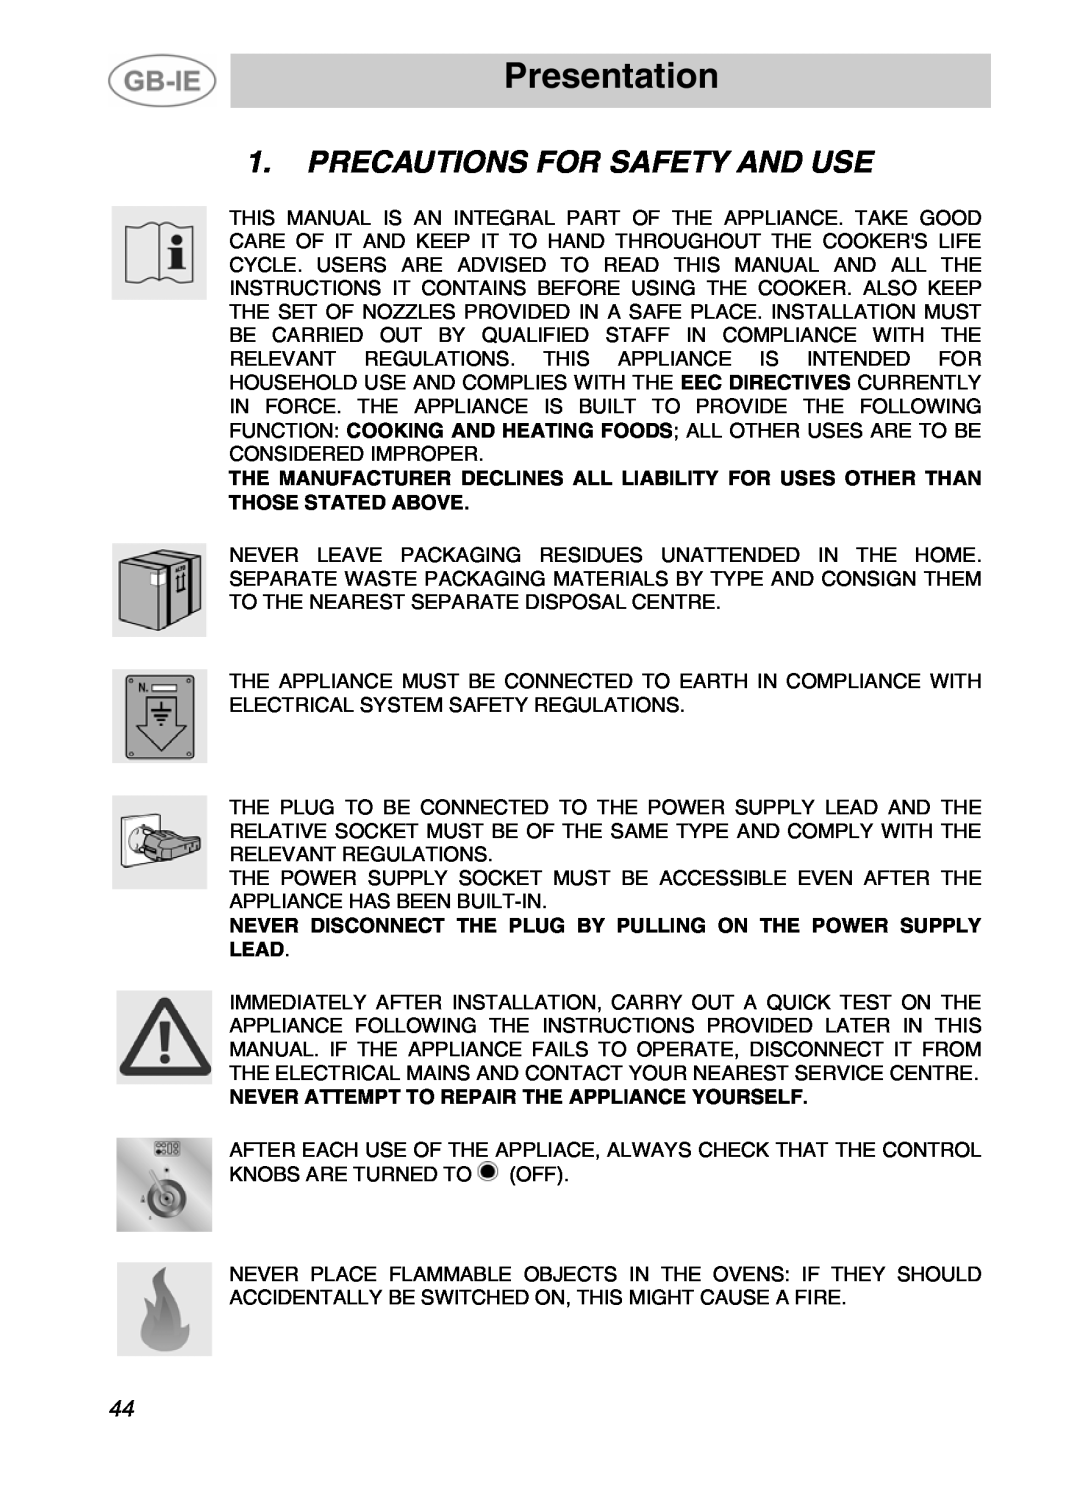 Smeg A4-5 manual Presentation, Precautions For Safety And Use 